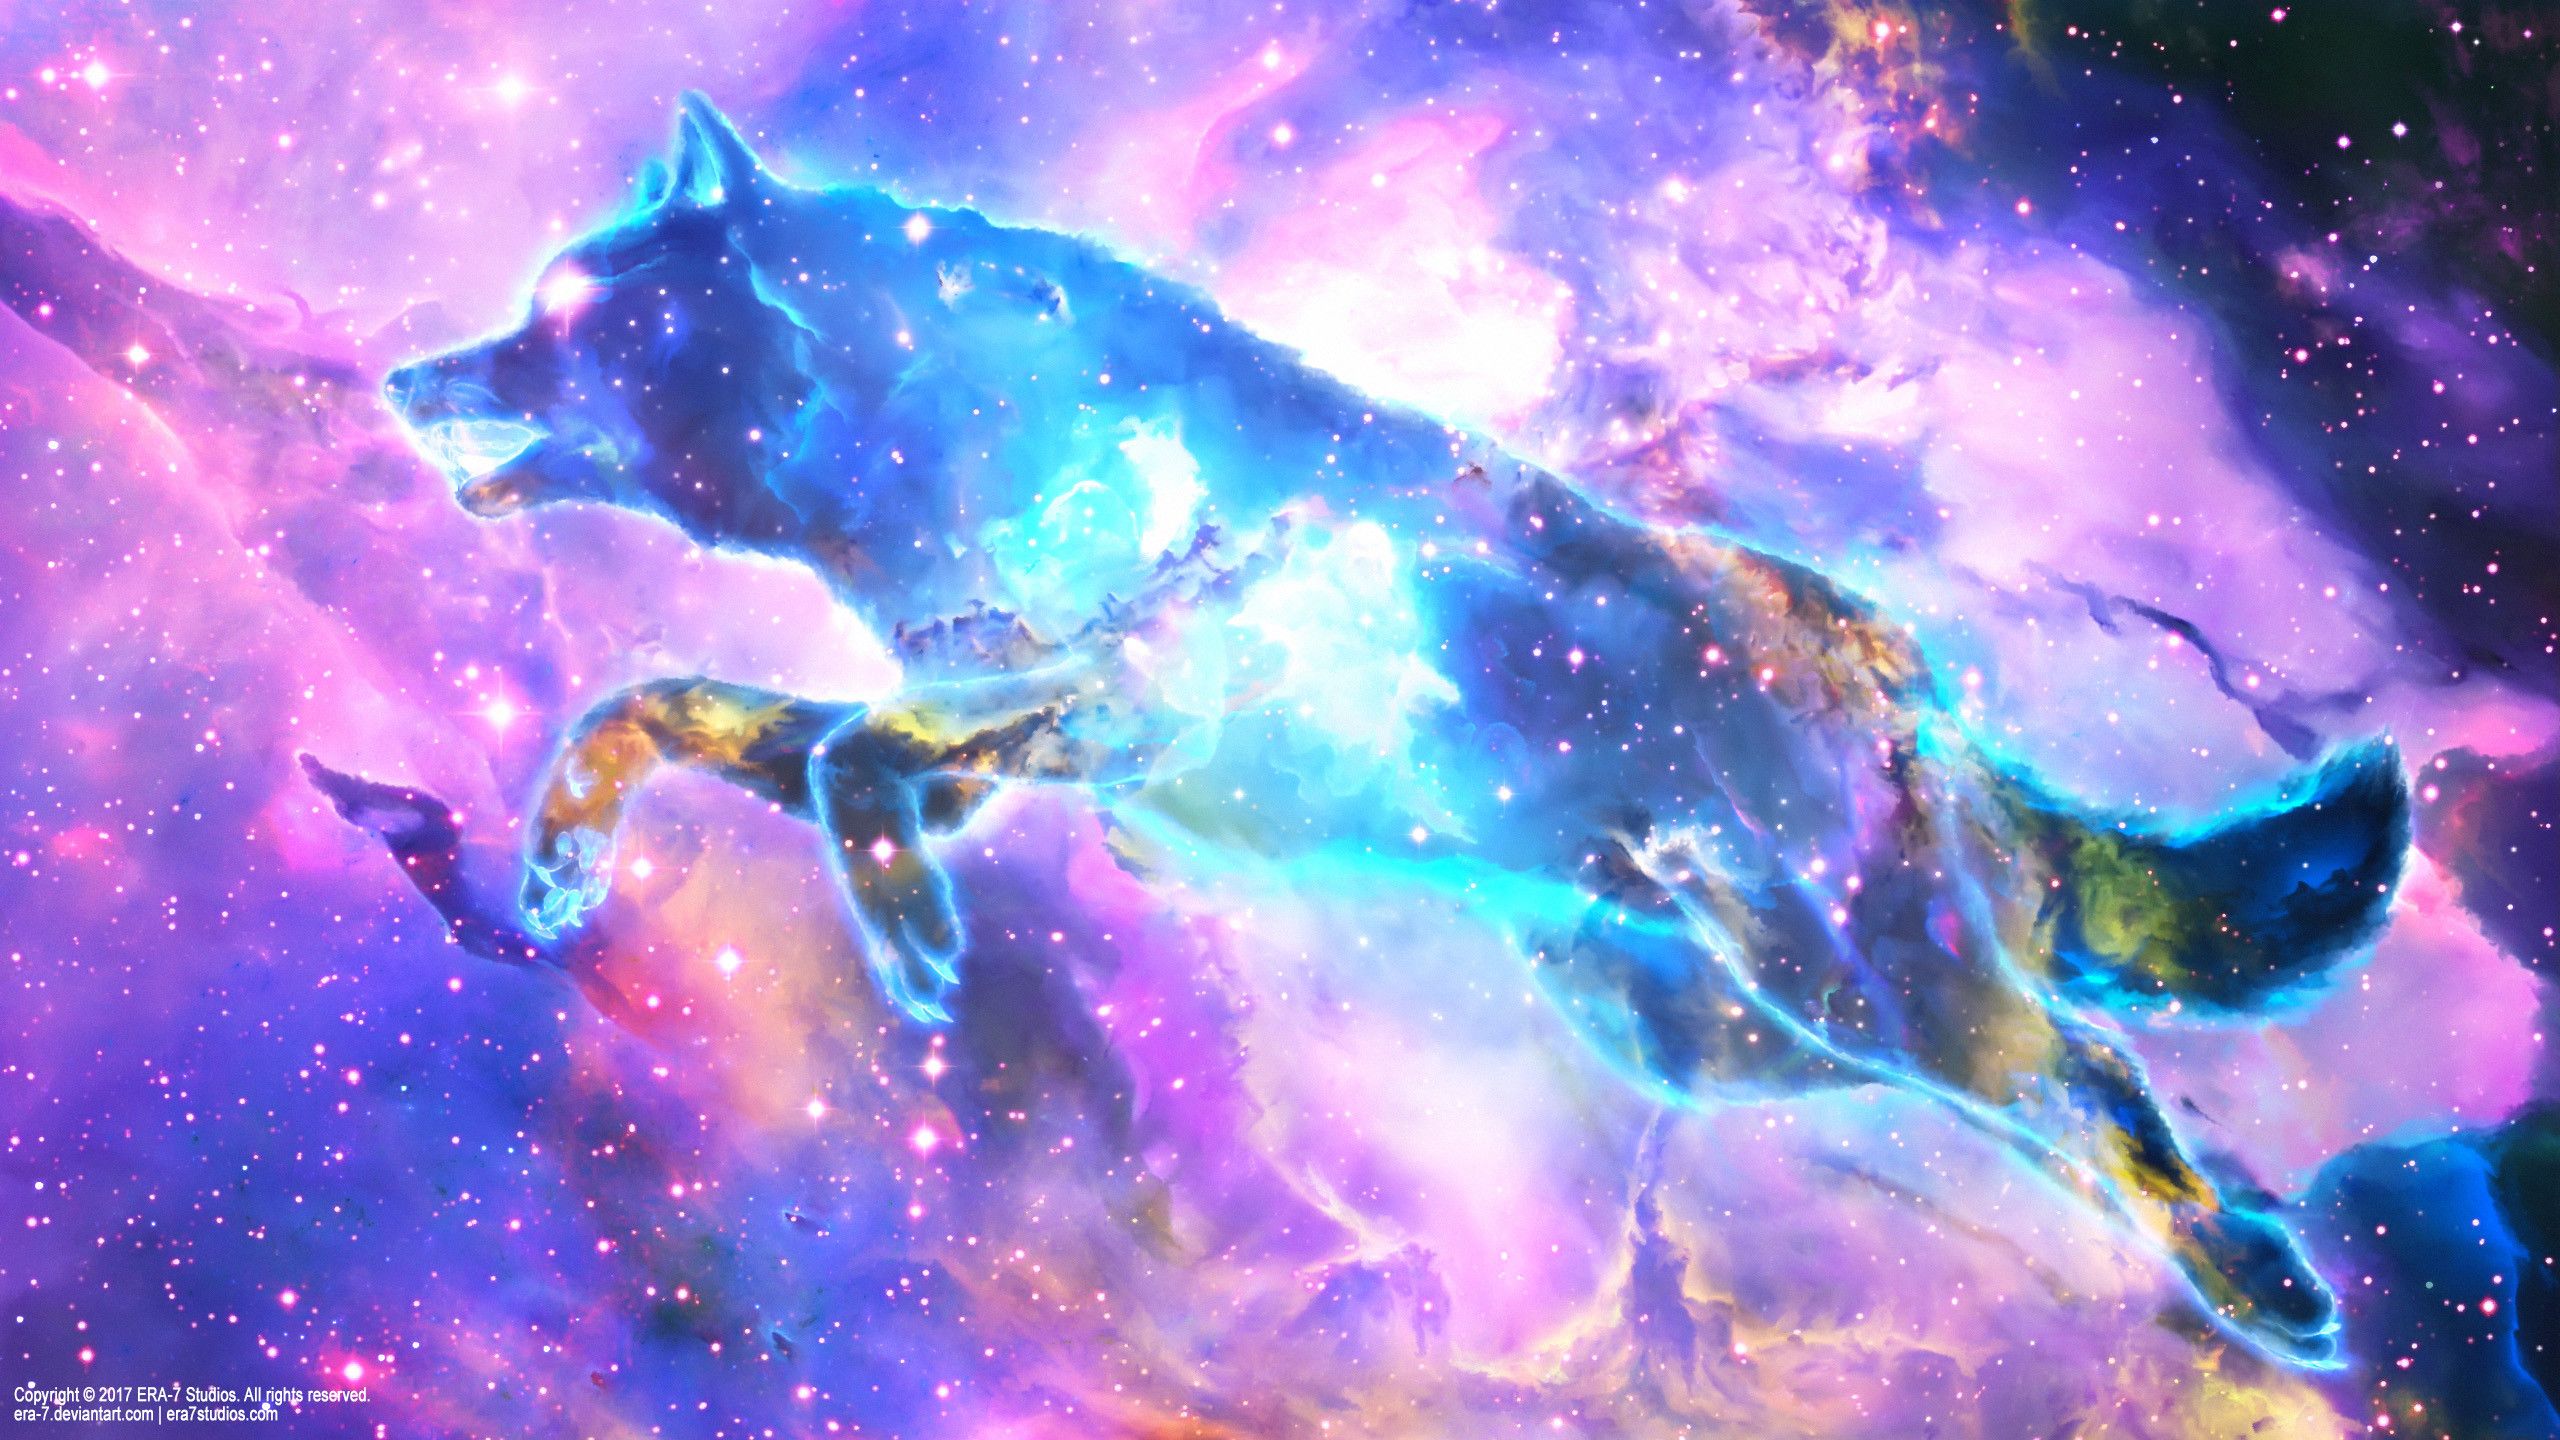 Wallpaper Galaxy Wolf Image